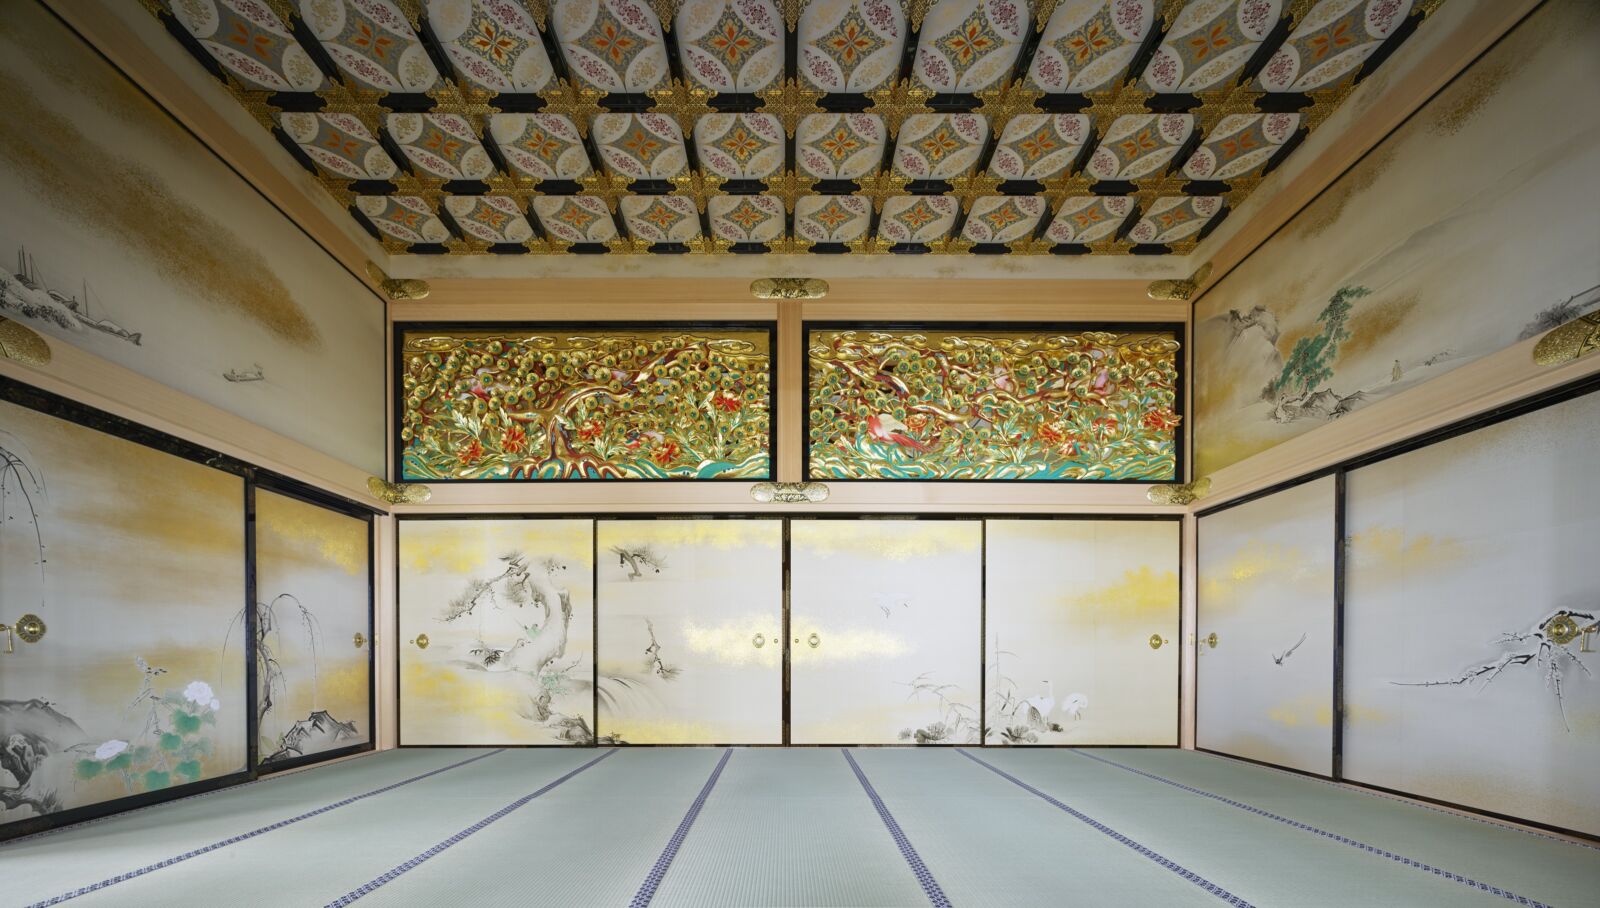 The extravagant interior of Honmaru Palace